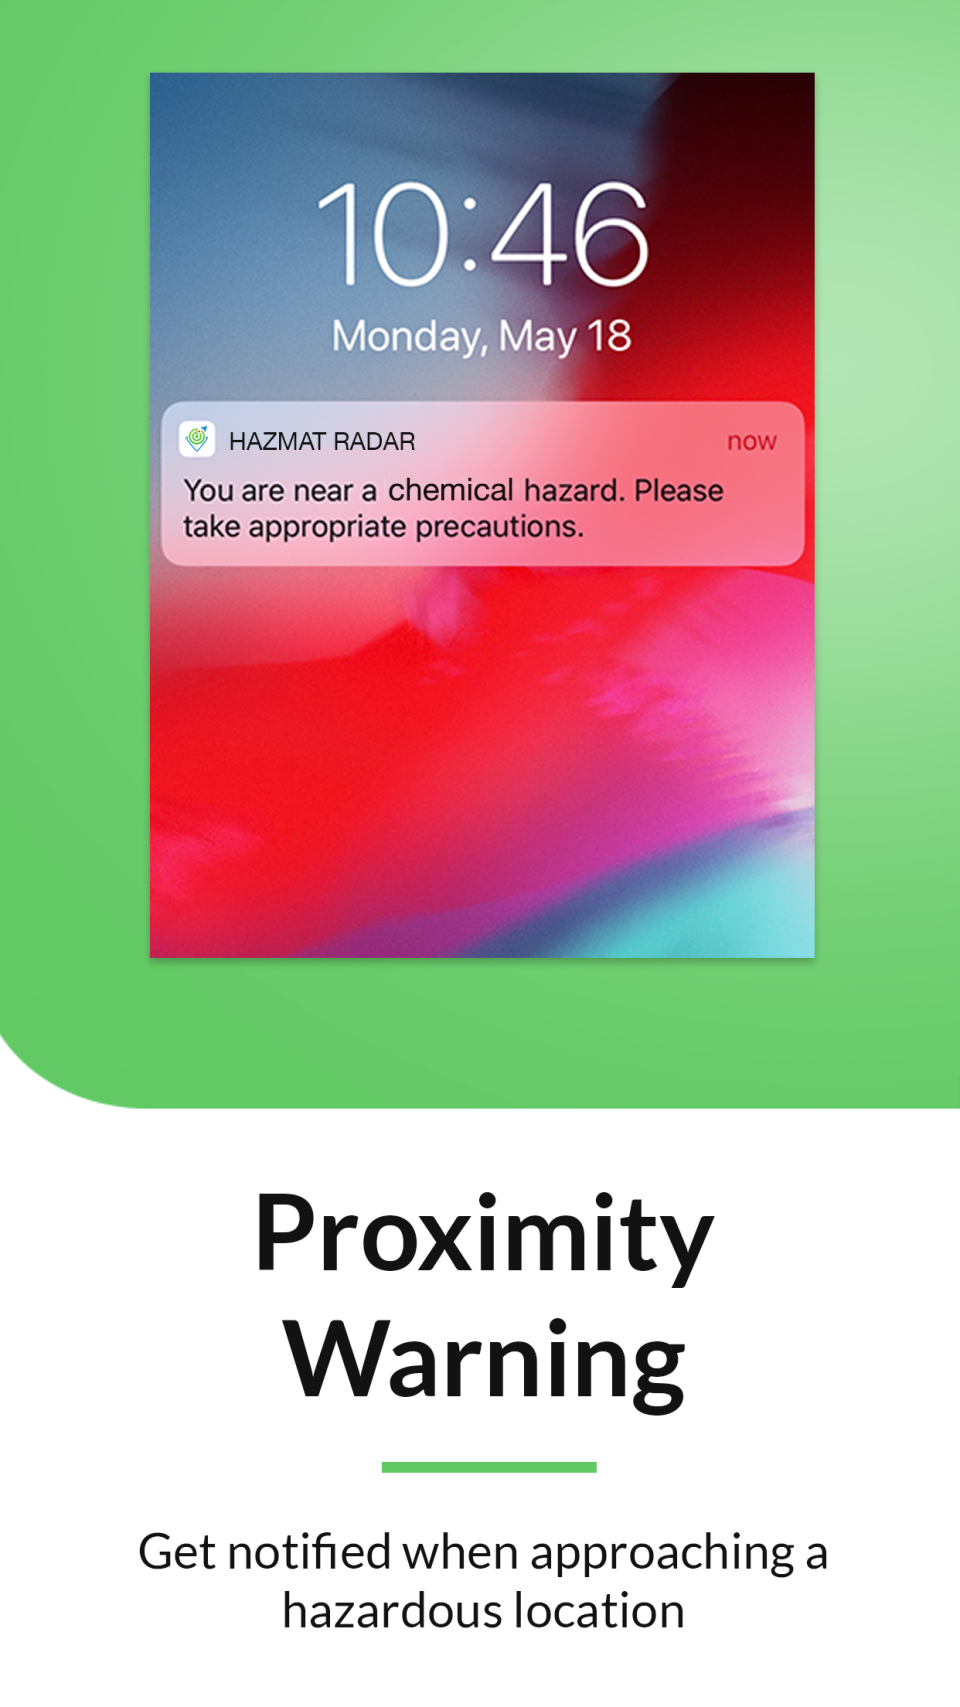 Proximity warning tool